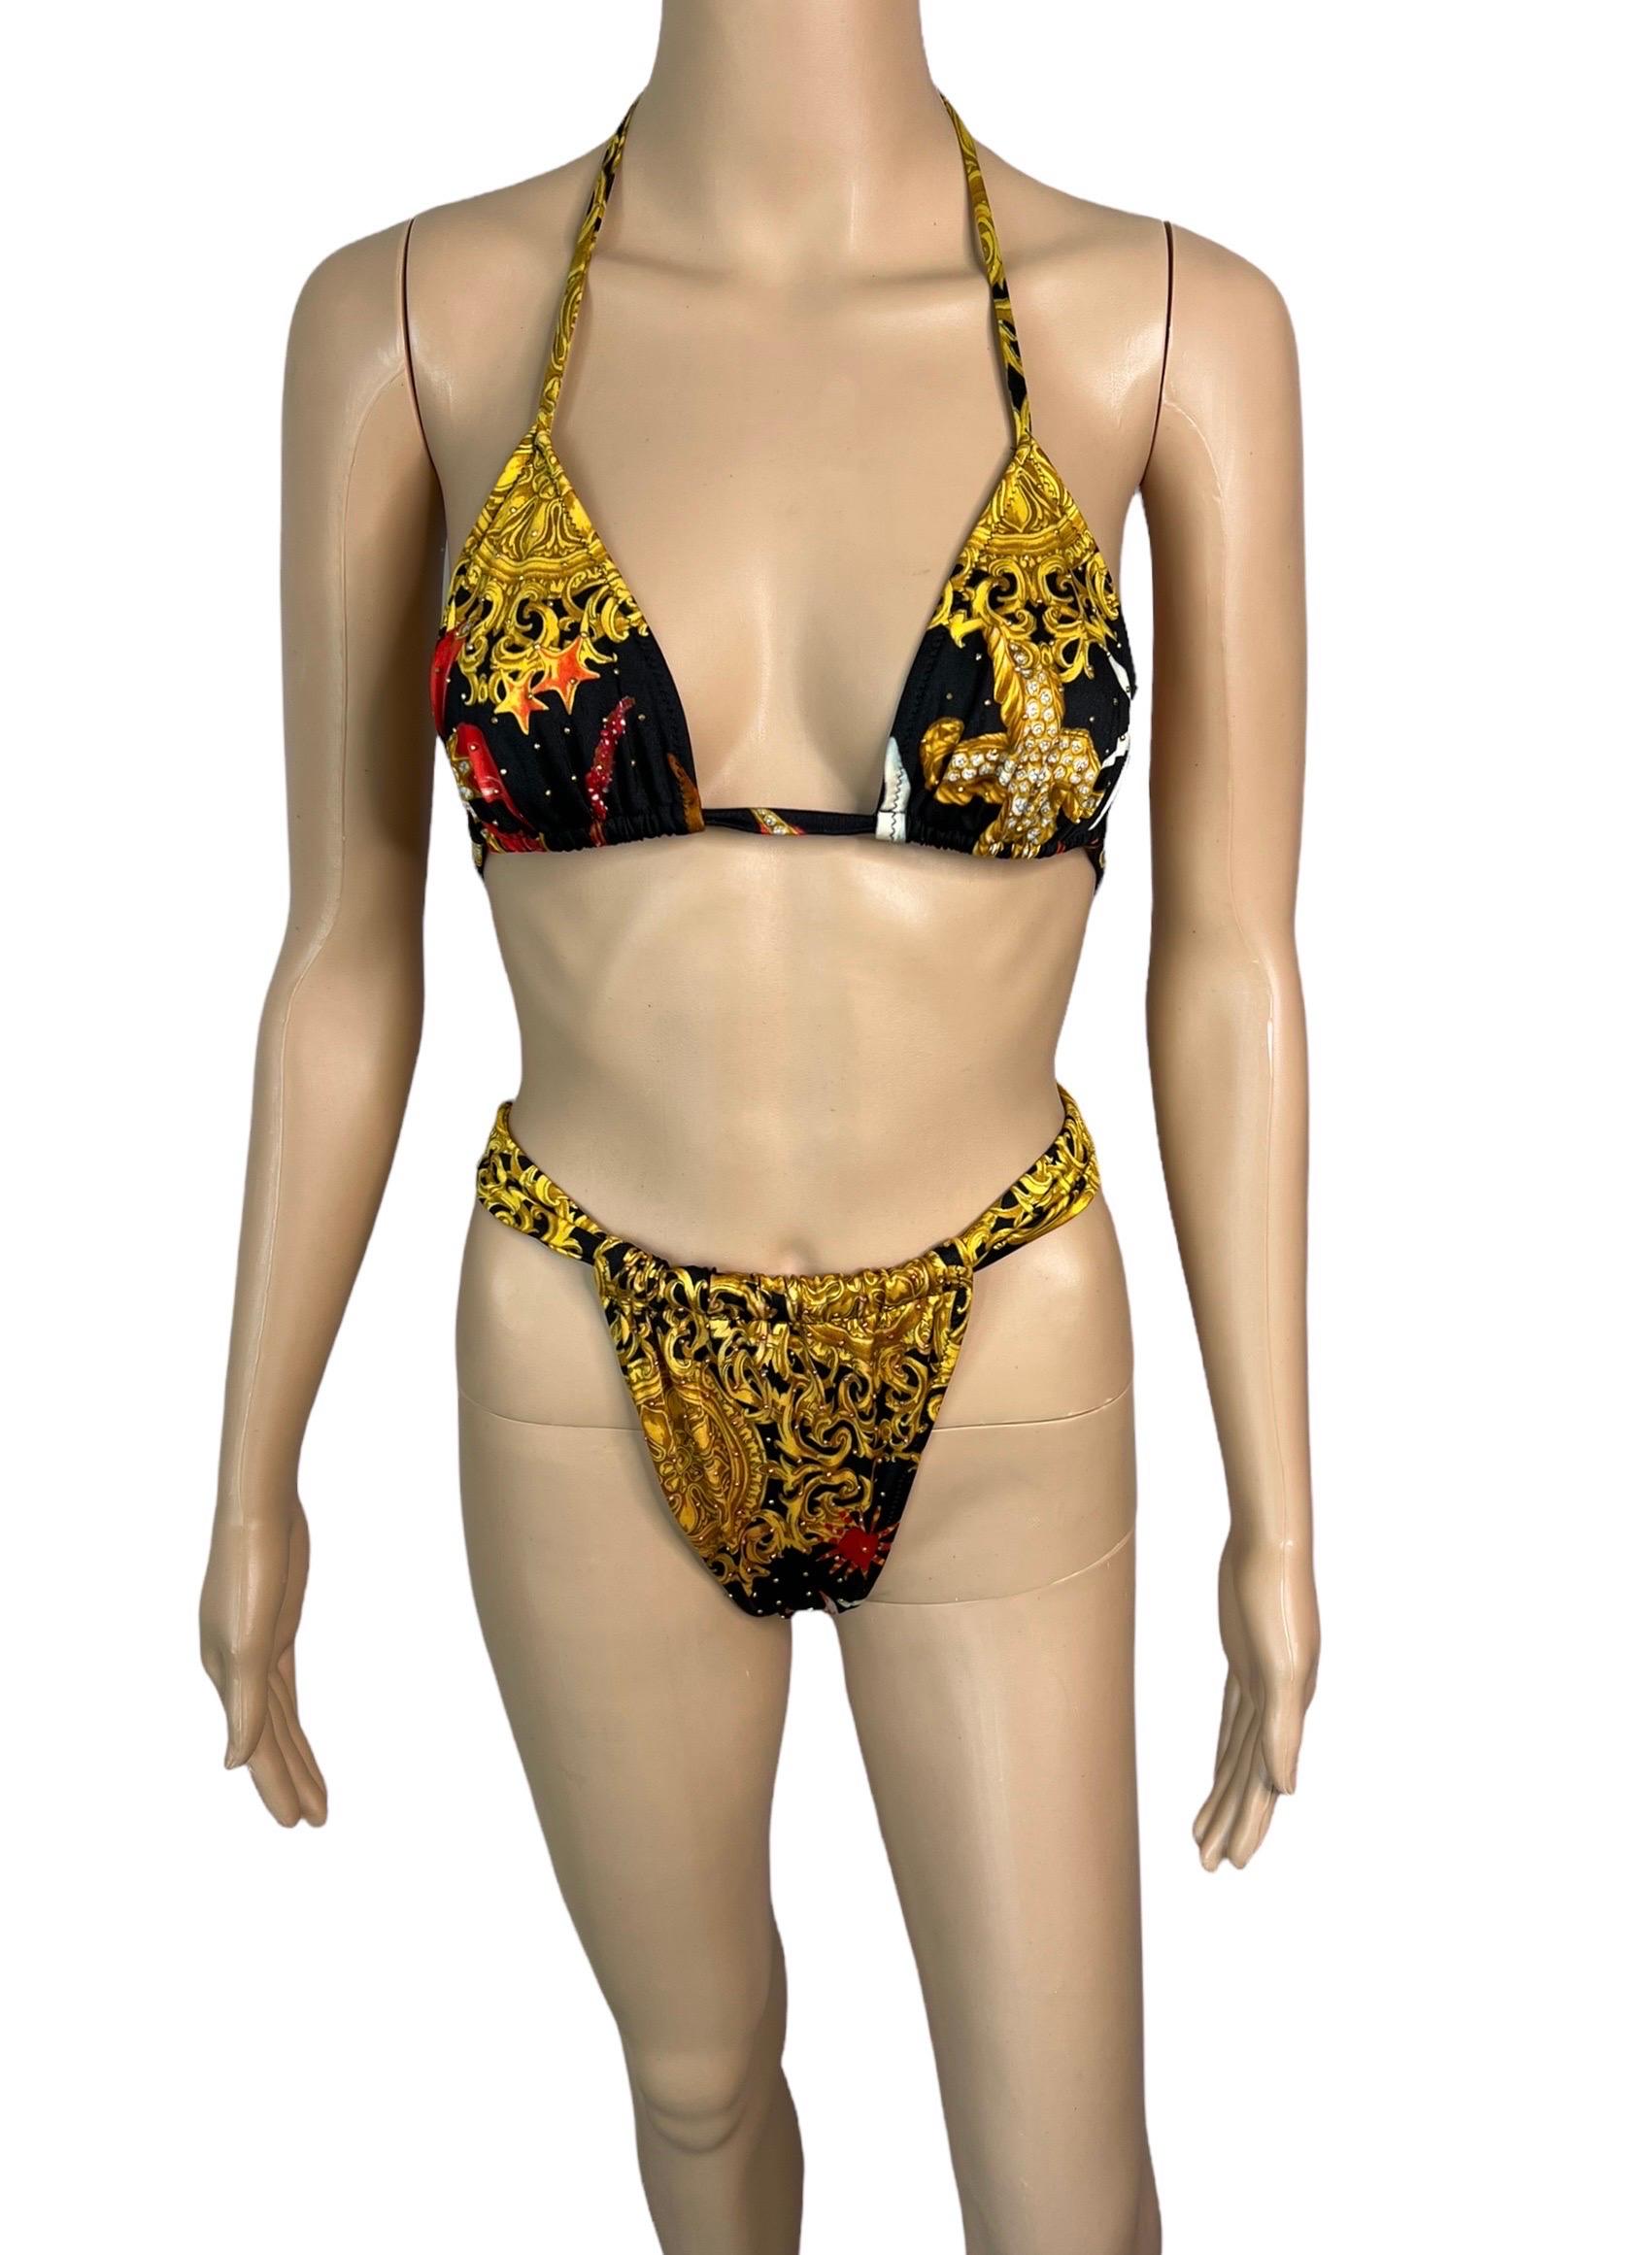 Gianni Versace S/S 1992 Baroque Embellished Two-Piece Bikini Swimsuit Swimwear For Sale 3